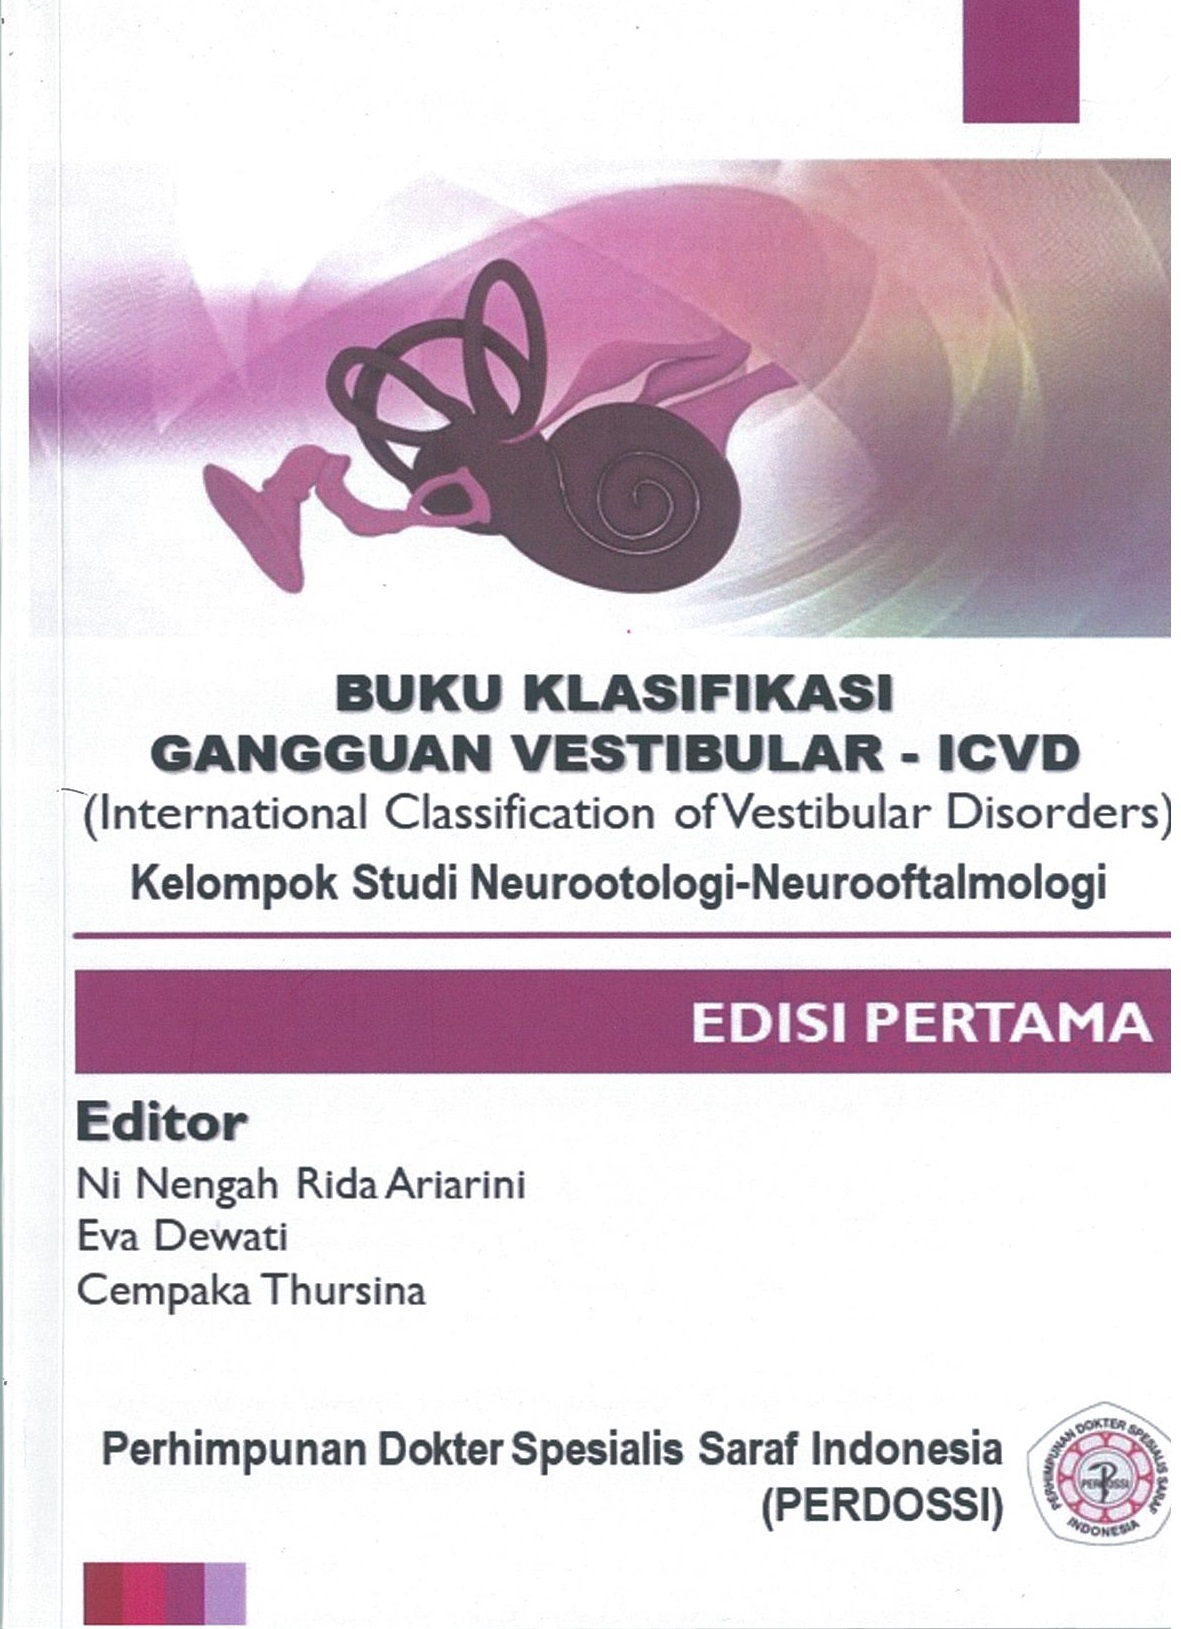 Buku klasifikasi gangguan vestibular - ICVD (International Classification of Vestibular Disorders) :  kelompok studi neurootologi-neurooftalmologi